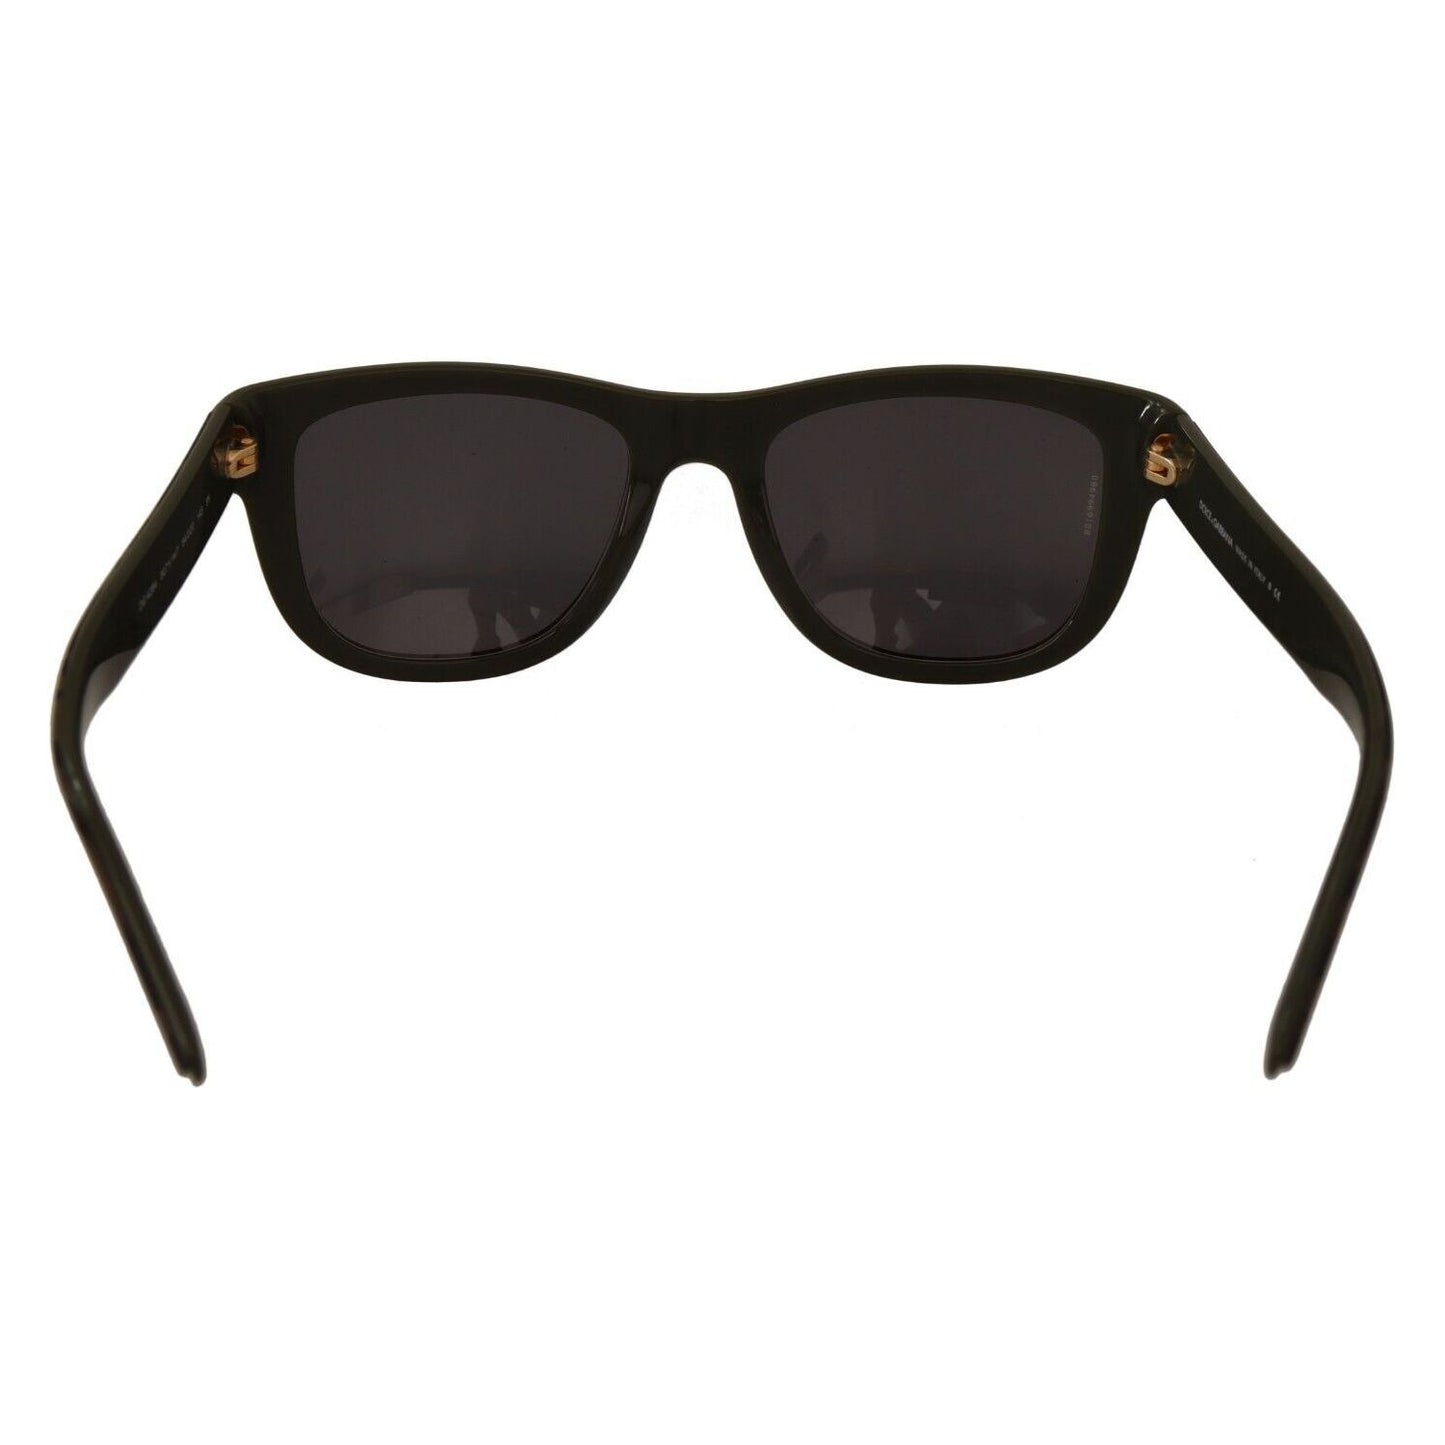 MAN SUNGLASSES Chic Black Acetate Designer Sunglasses Dolce & Gabbana